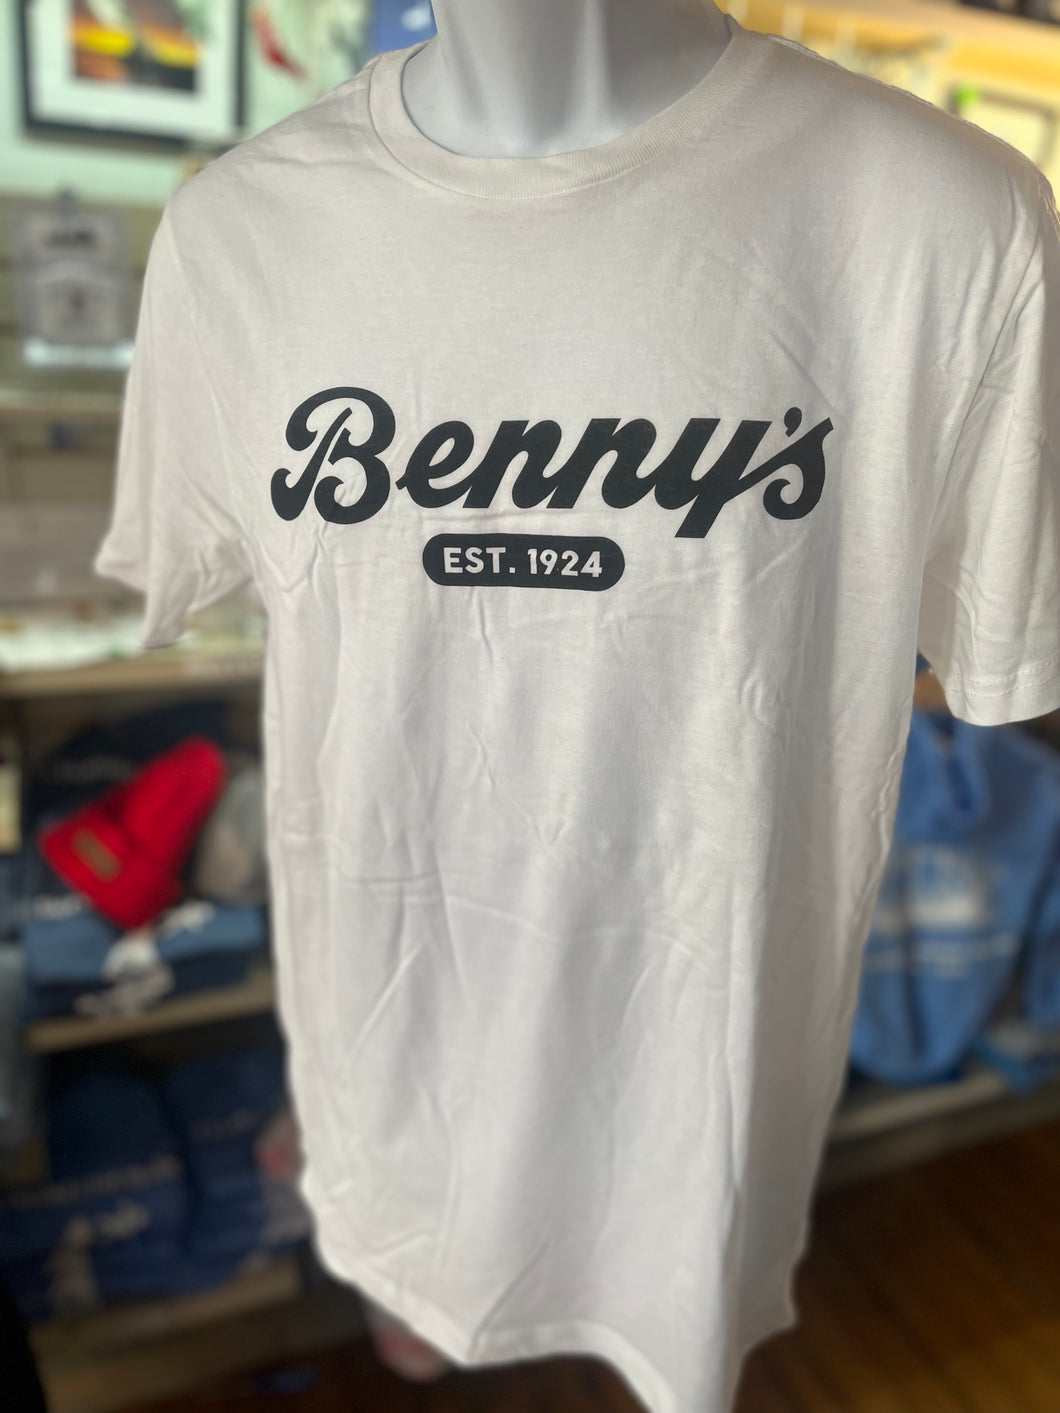 Benny’s T-shirt, 1924